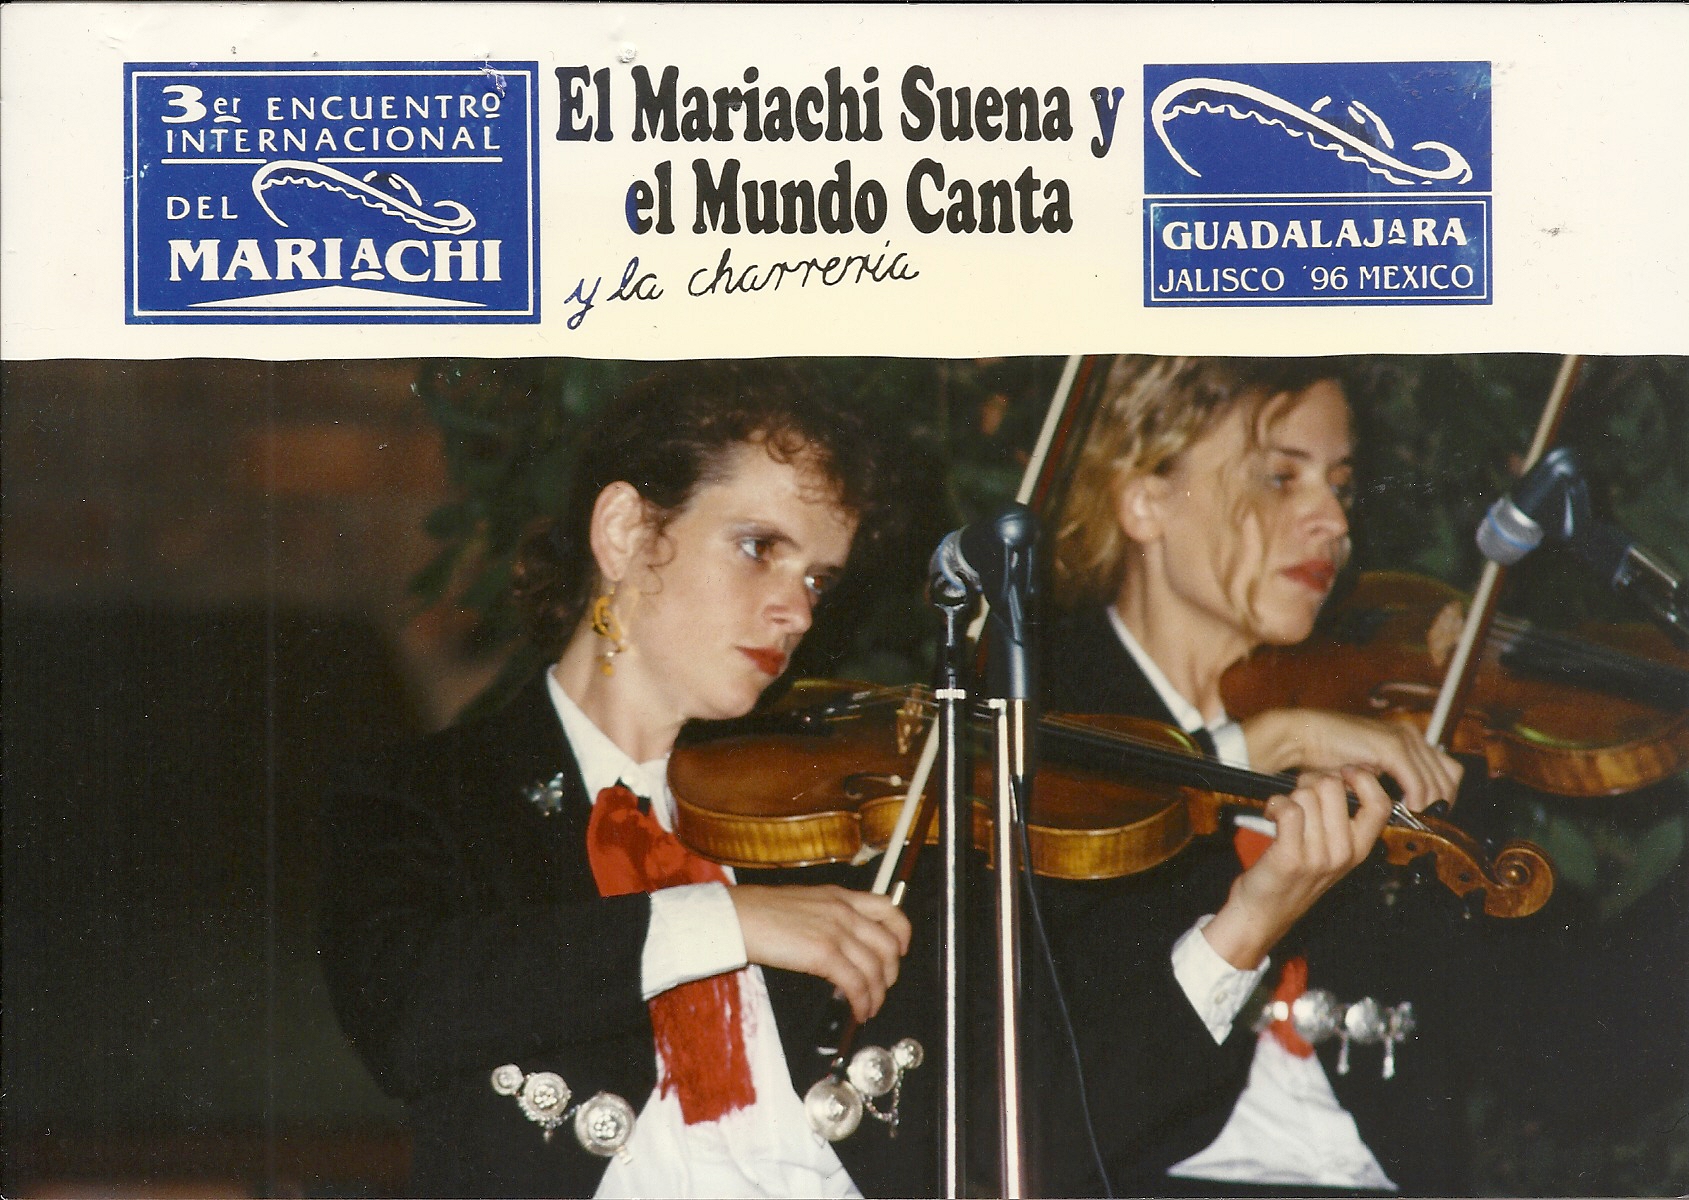 mariachi-tierra-caliente-in-guadalajara-mexico-1996-met-ute-apfelstedt